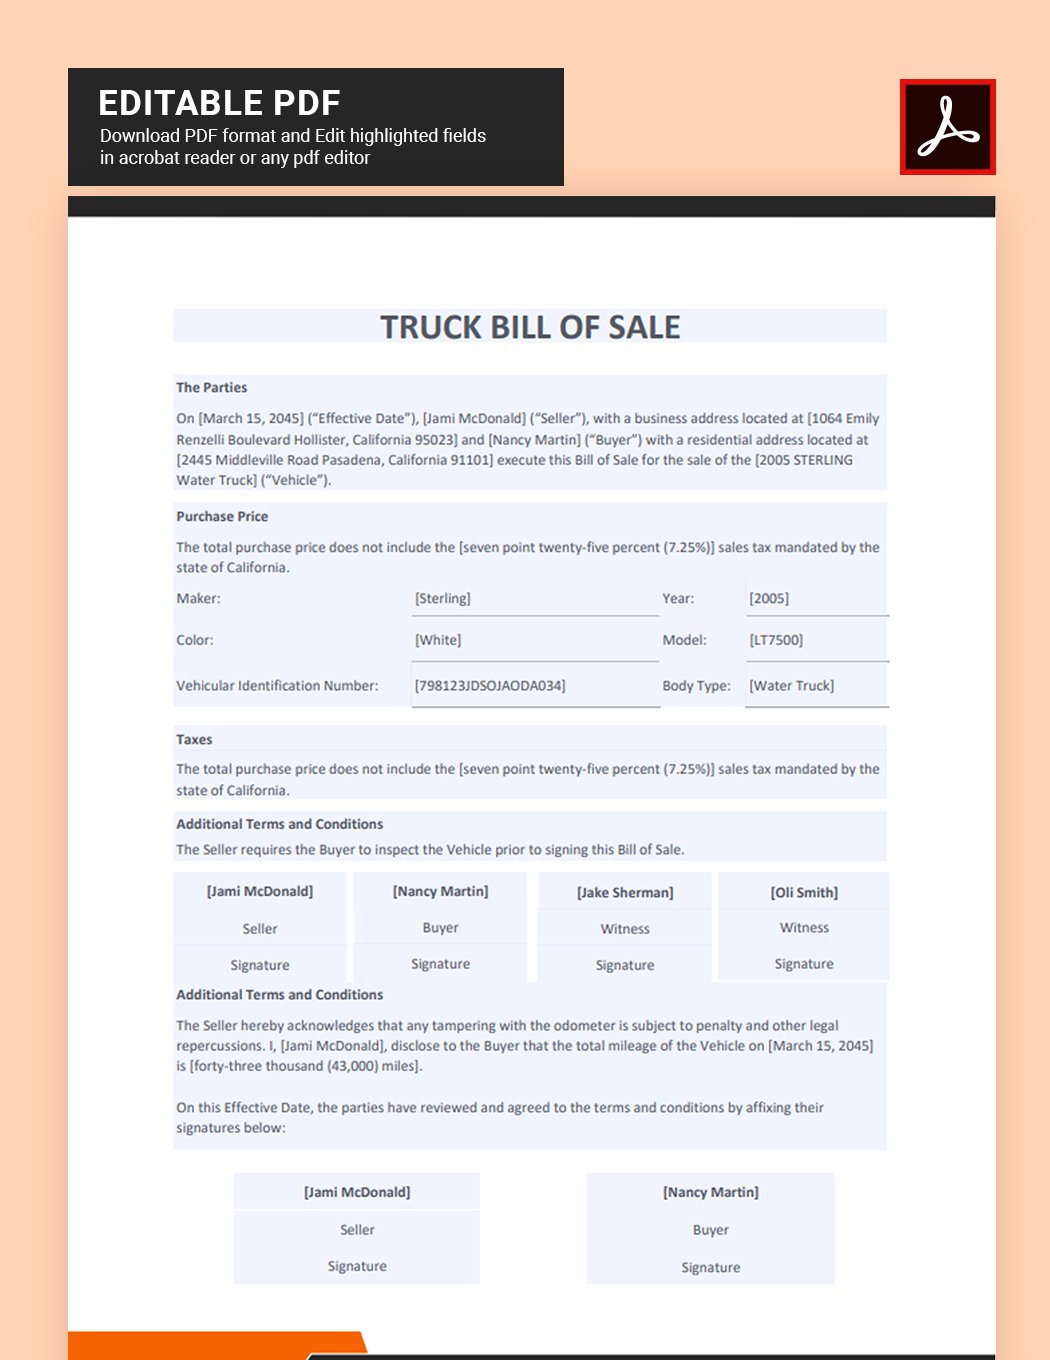 Truck Bill of Sale Template